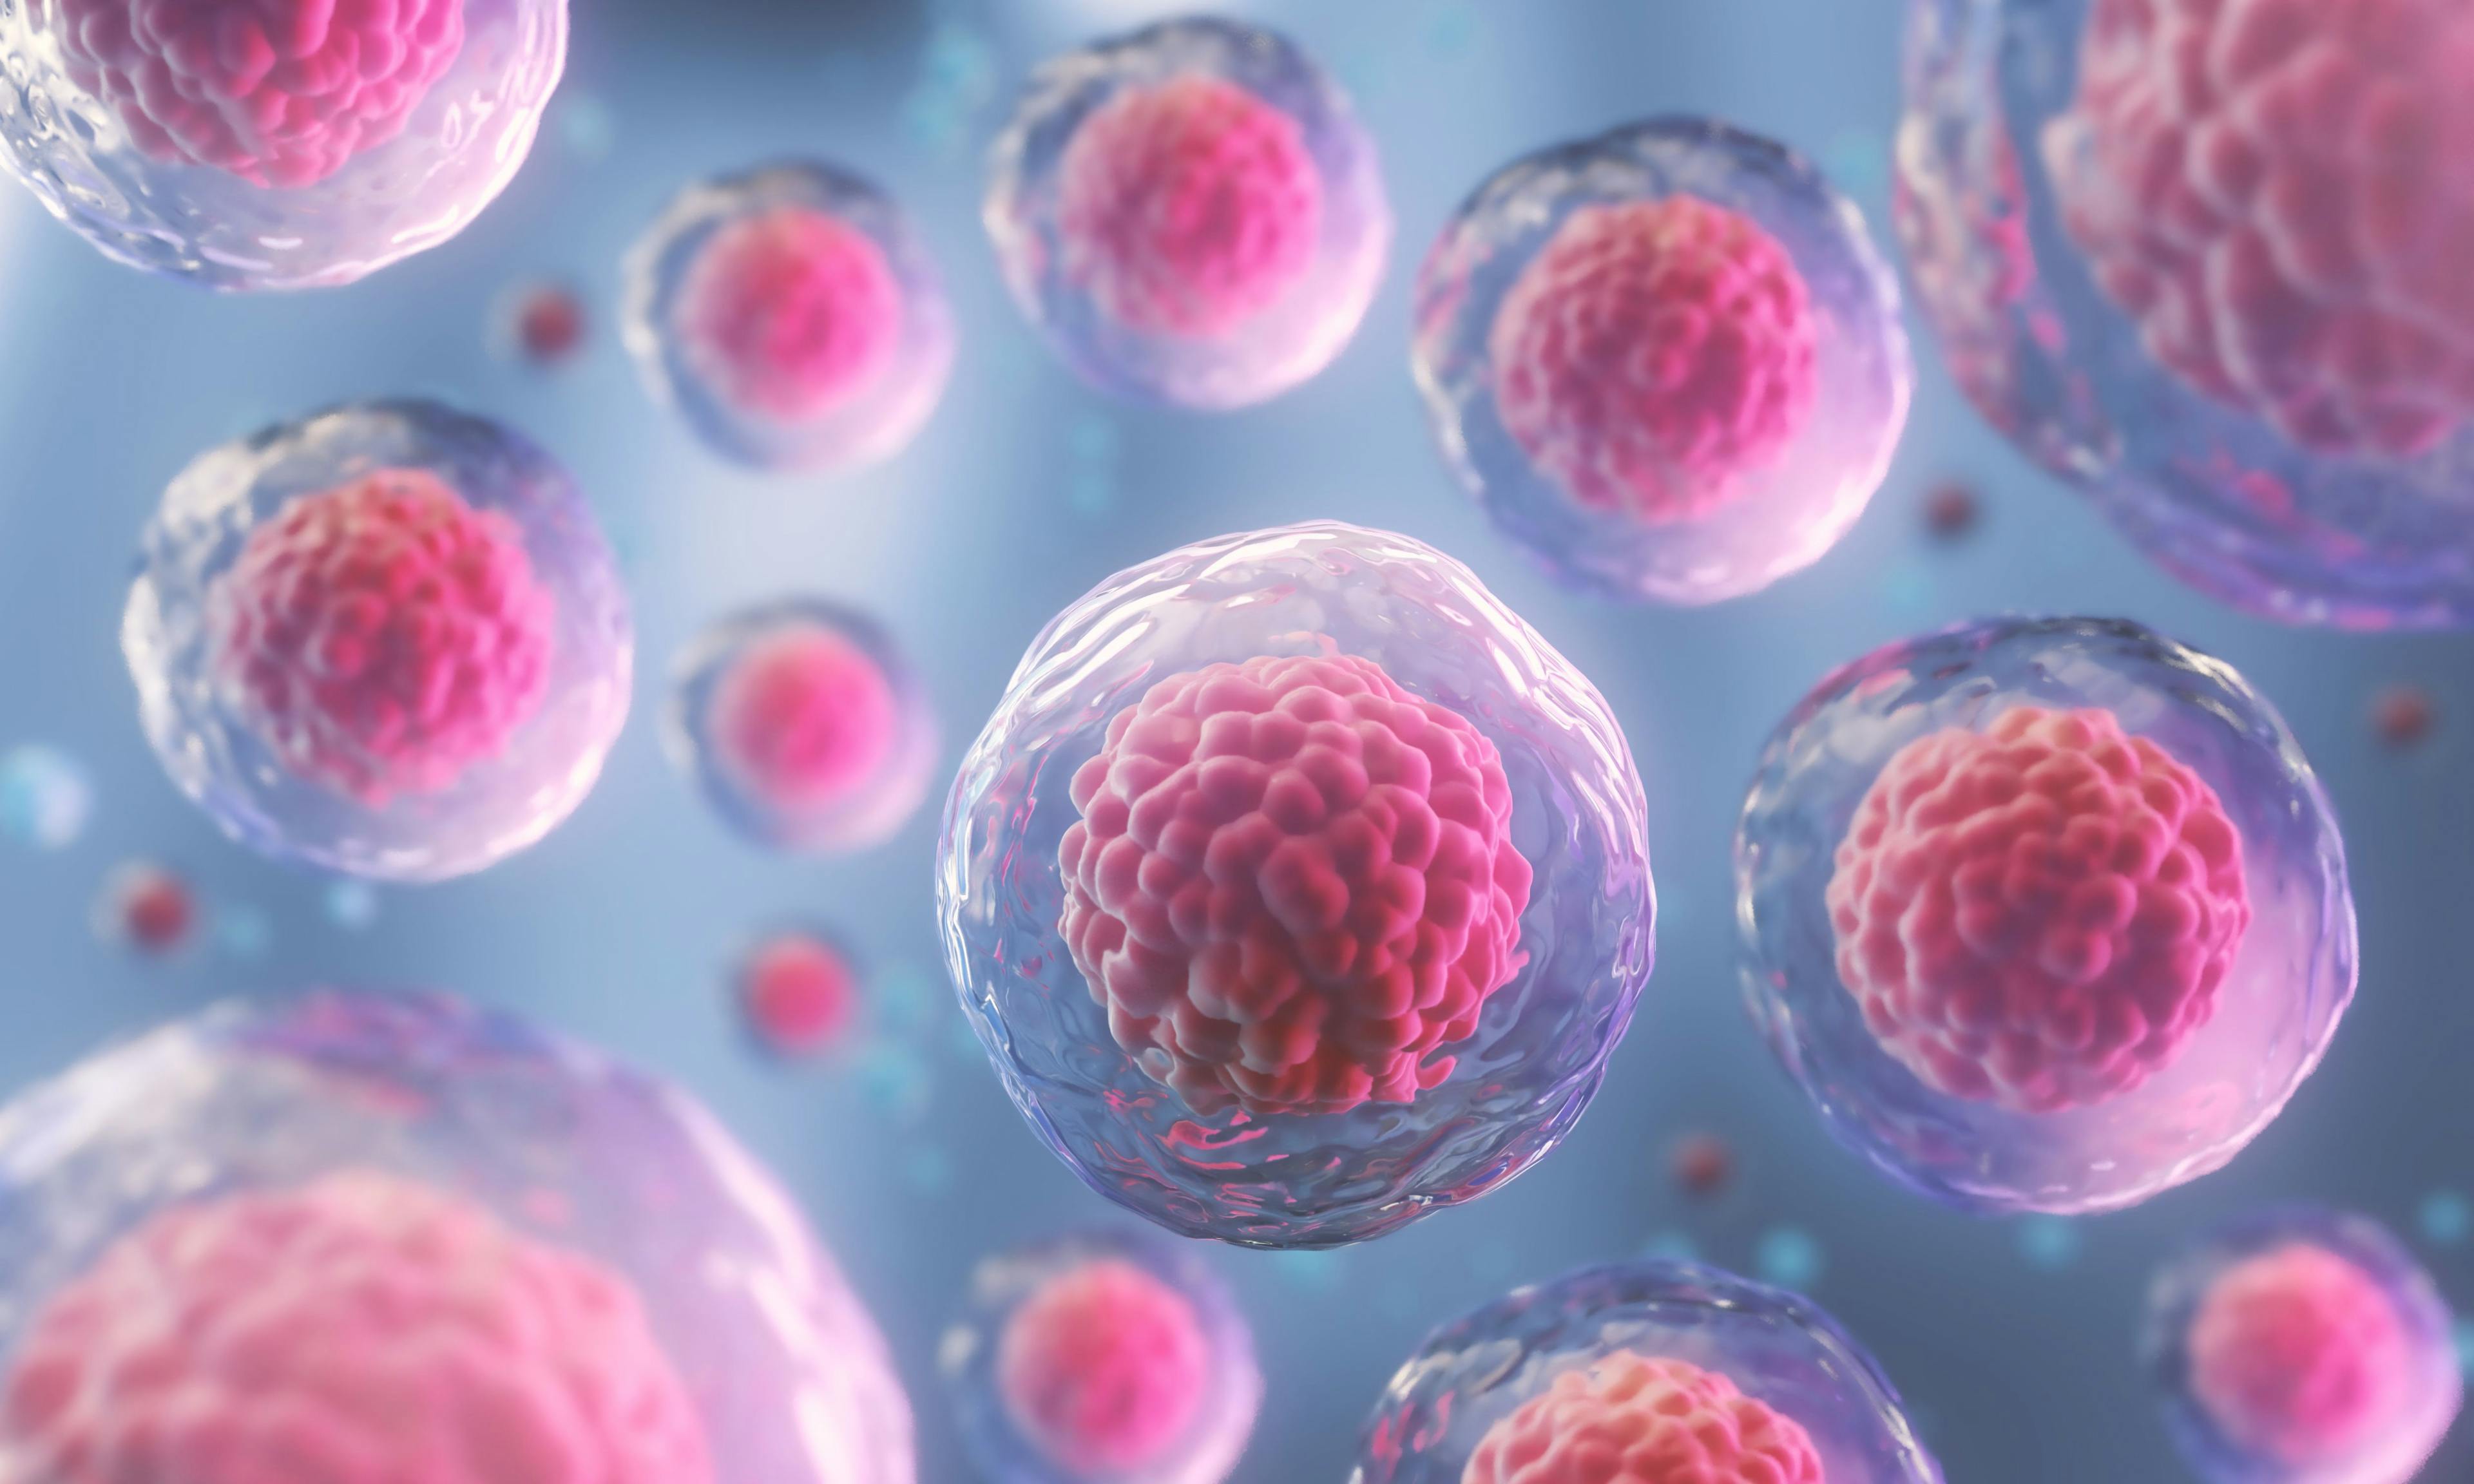 Stem Cell Concept | image credit: Anusorn - stock.adobe.com